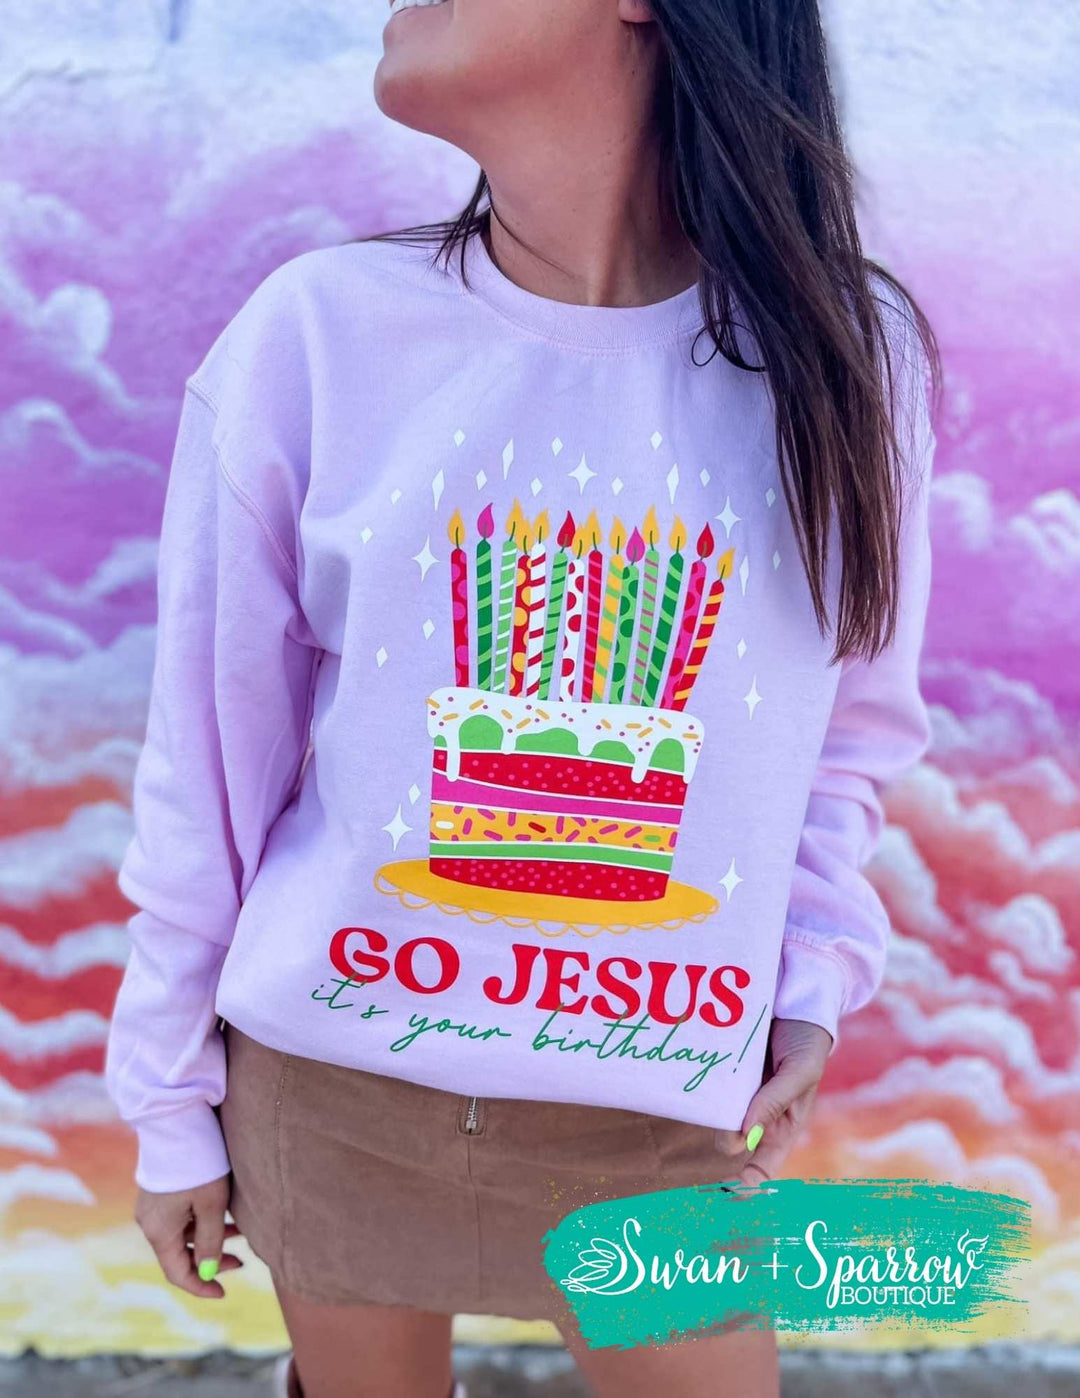 Go Jesus it's your birthday - Sweatshirt